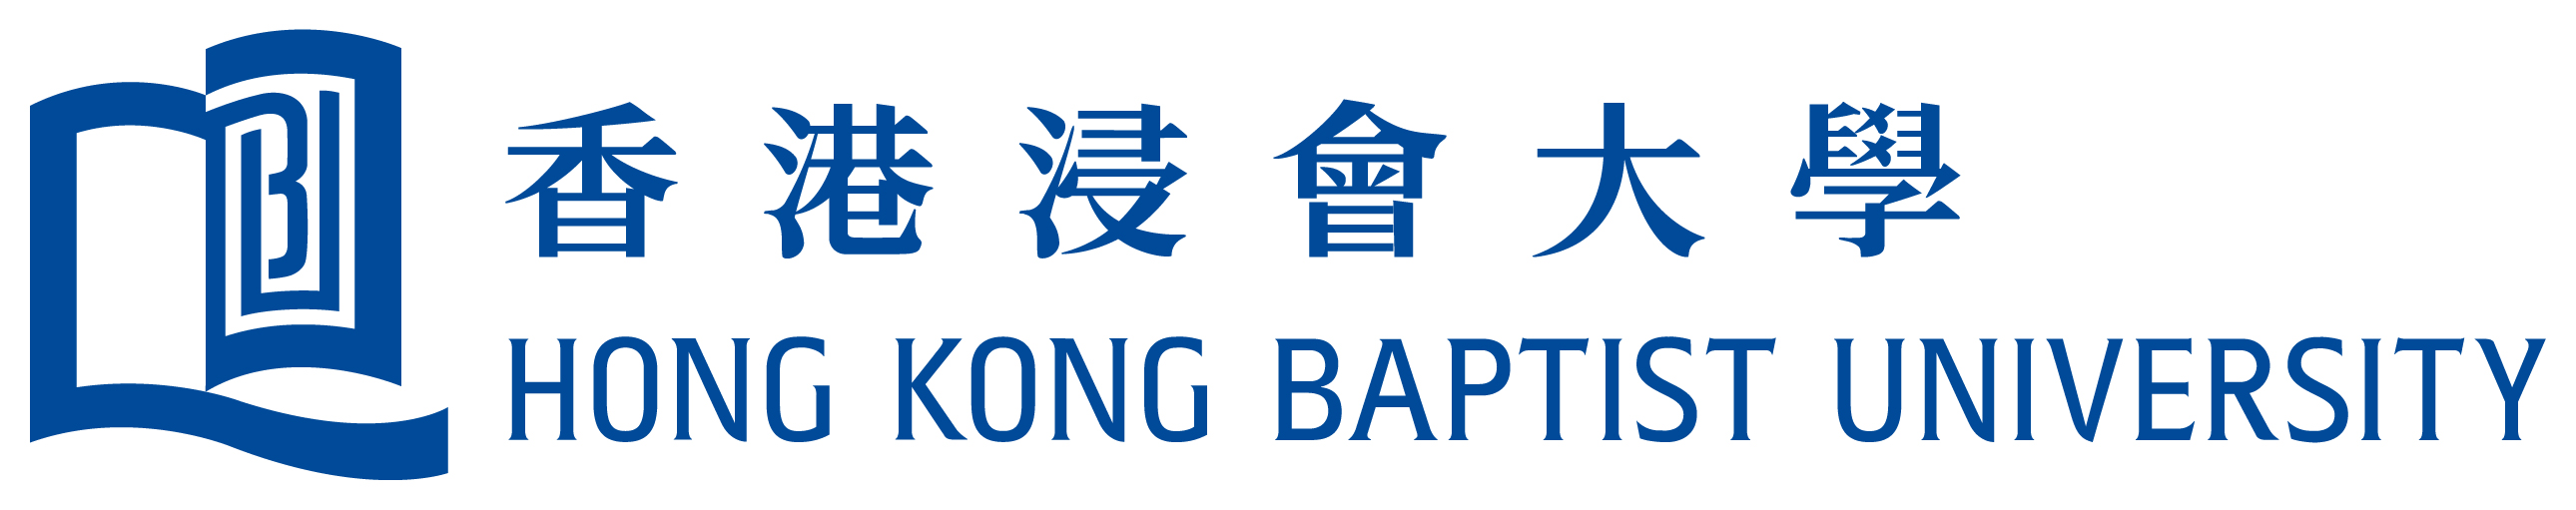 HKBU-updated-logo